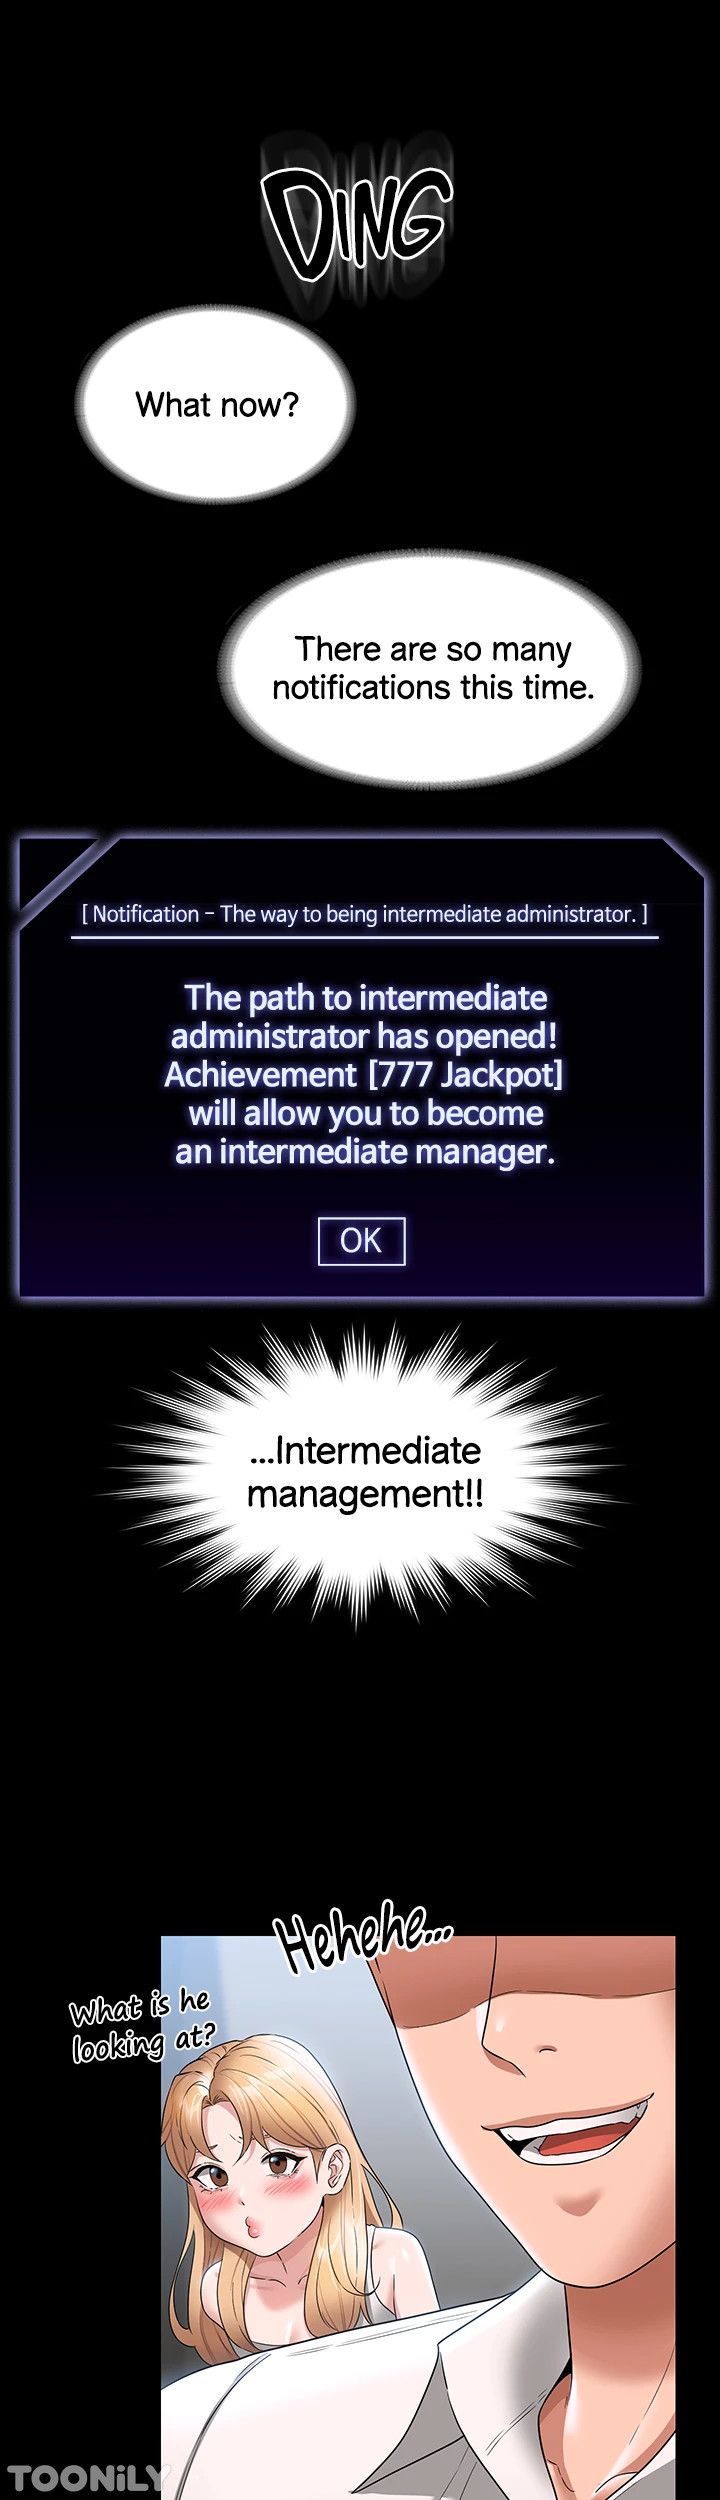 Supervisor Access image